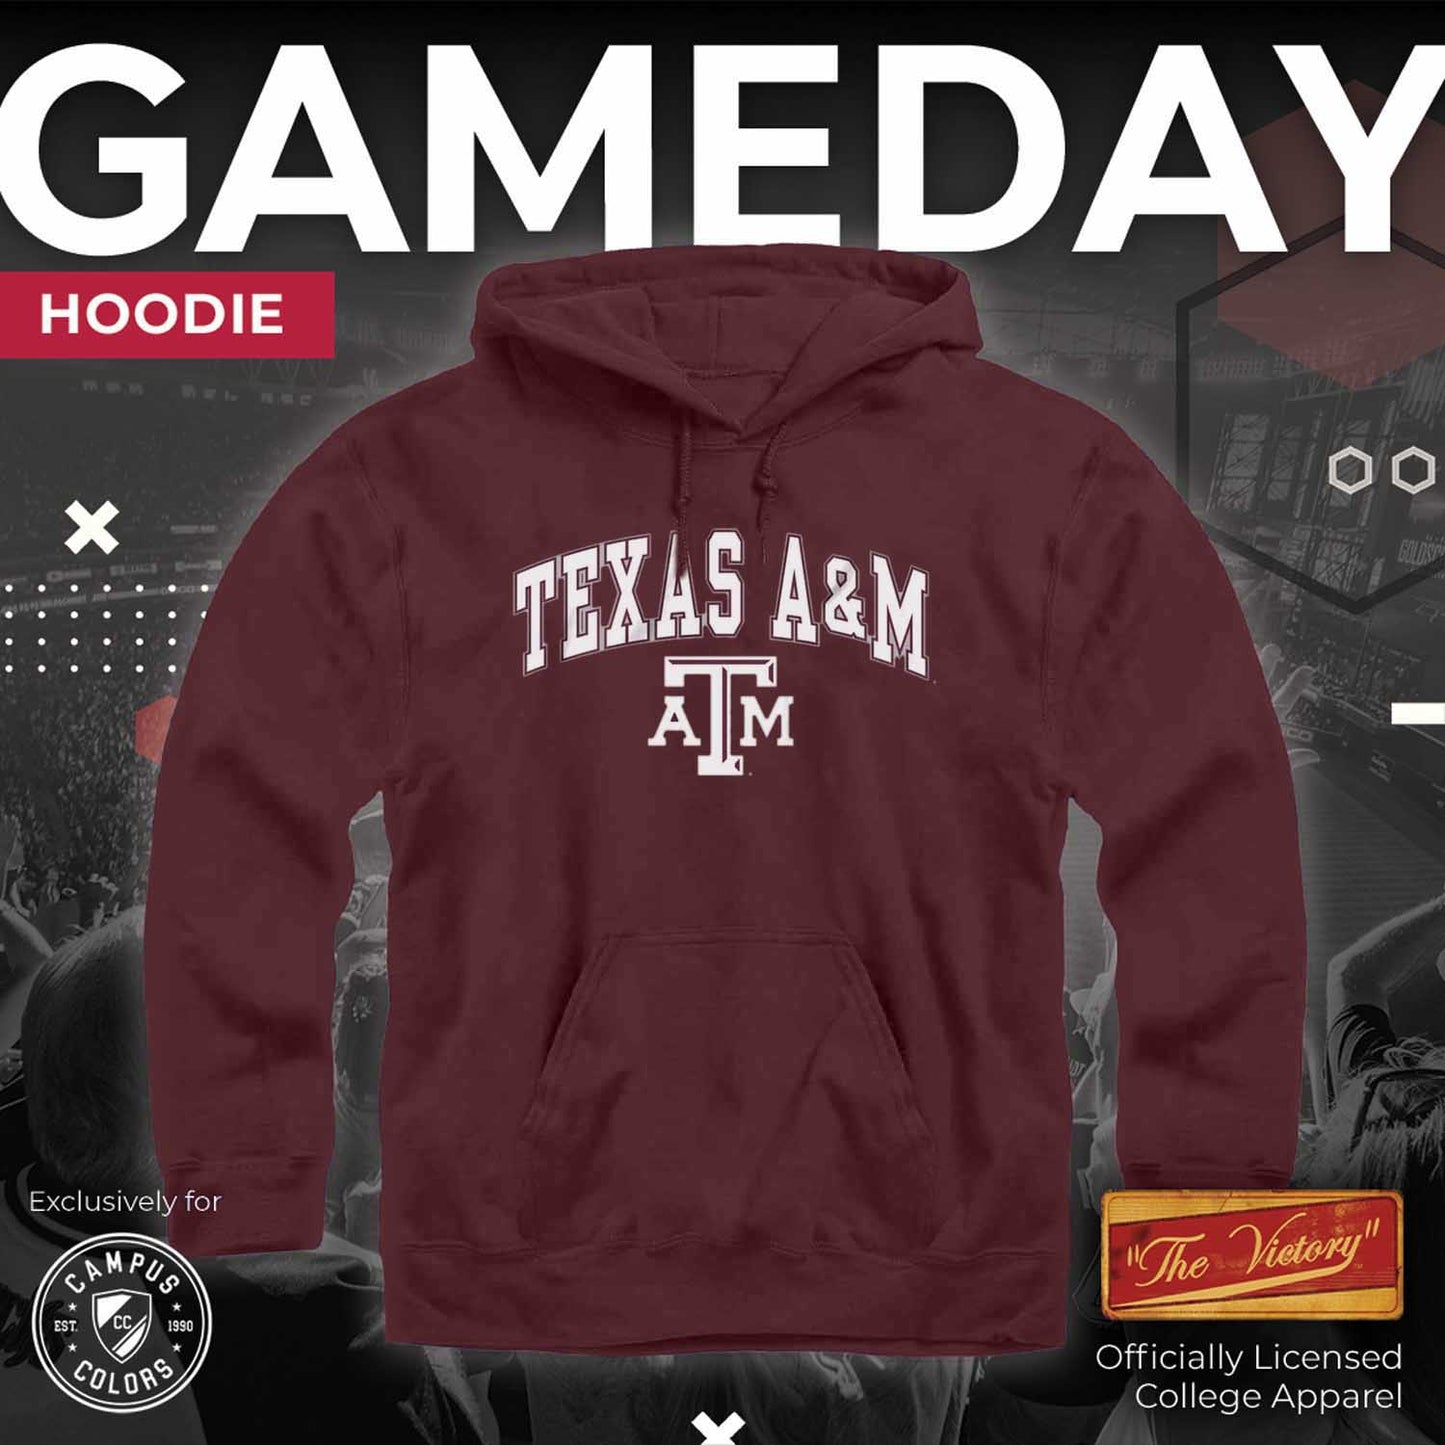 Texas A&M Aggies Adult Arch & Logo Soft Style Gameday Hooded Sweatshirt - Maroon